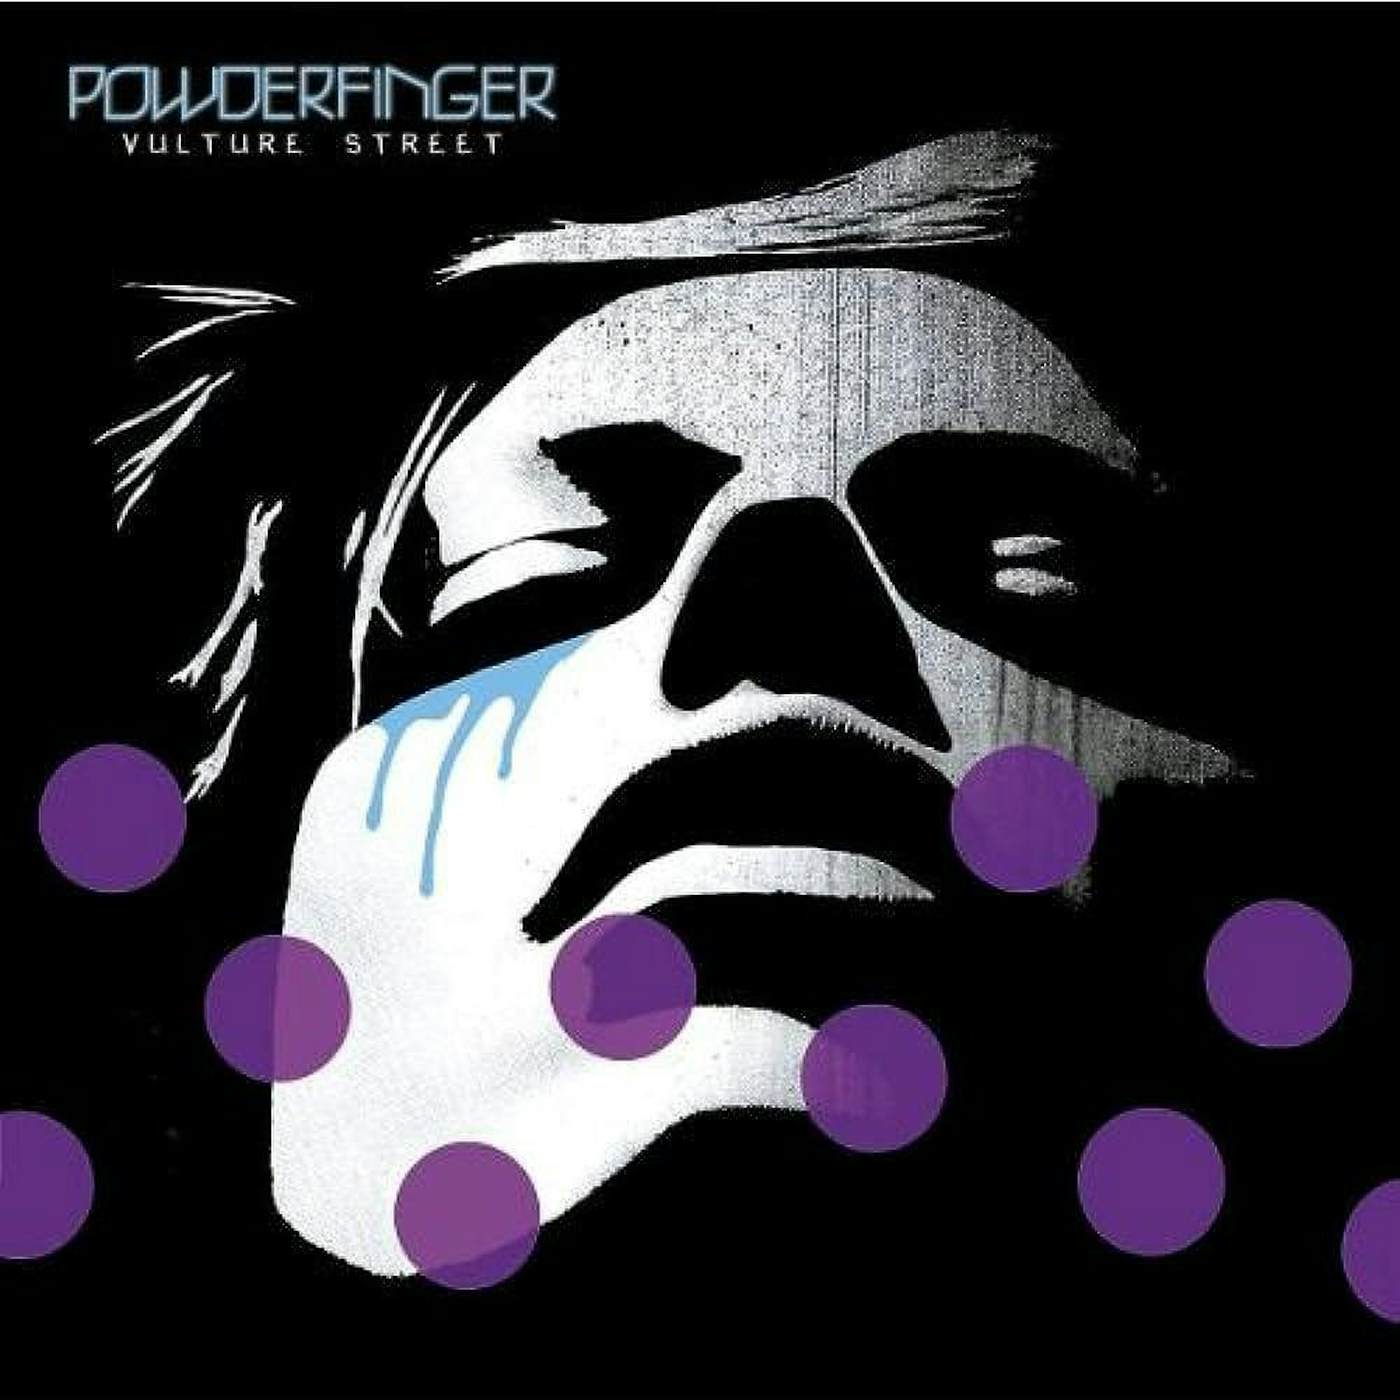 Powderfinger Vulture Street: 20th Anniversary Vinyl Record